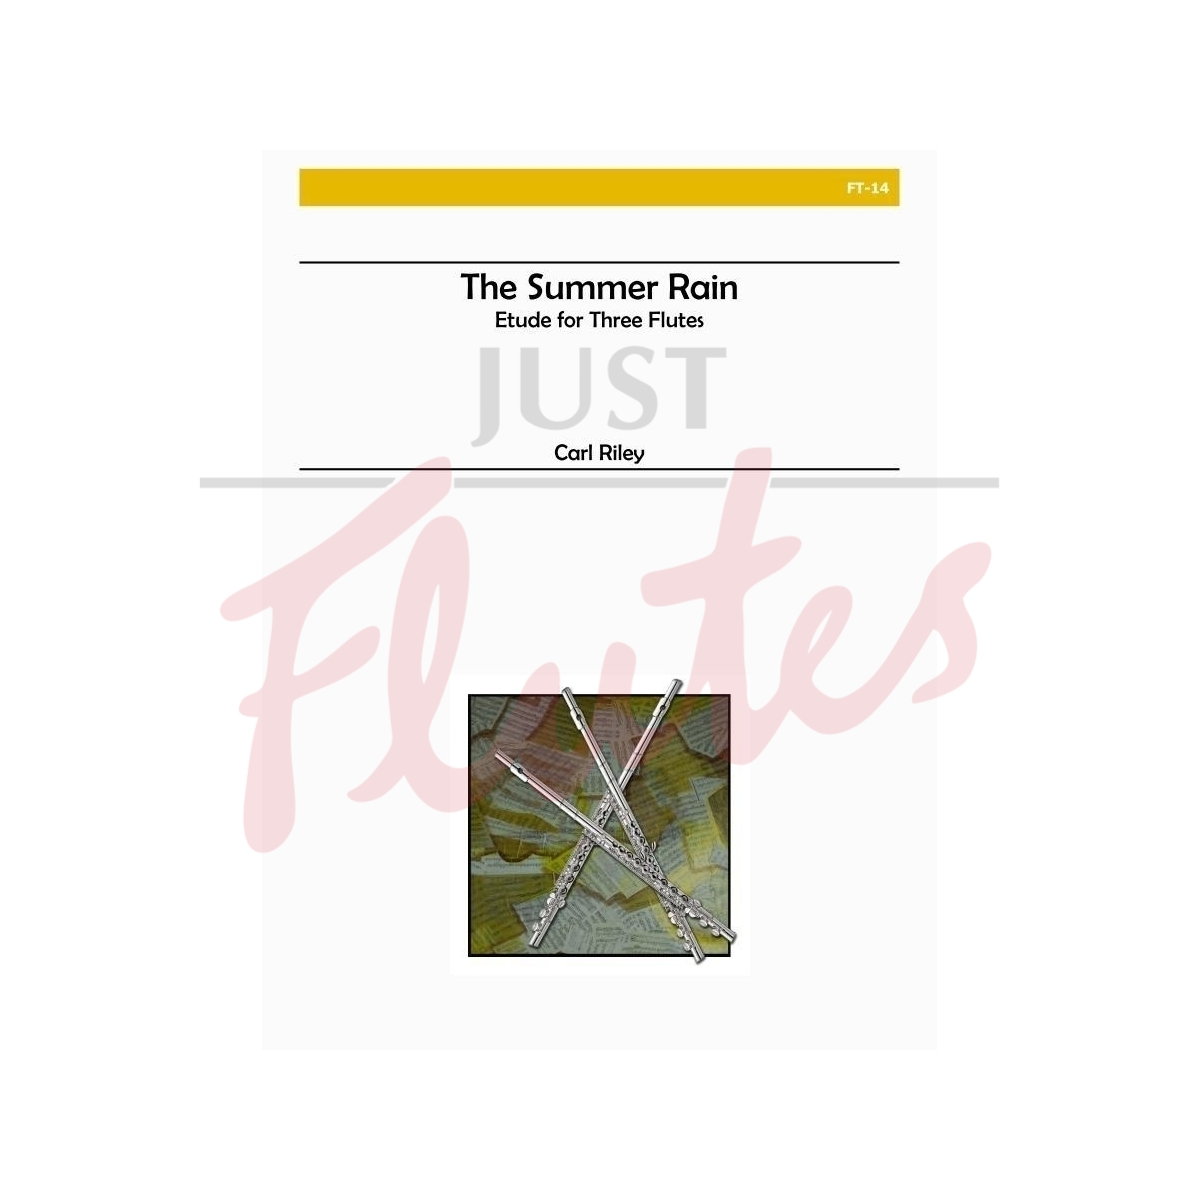 The Summer Rain - Etude for Three Flutes